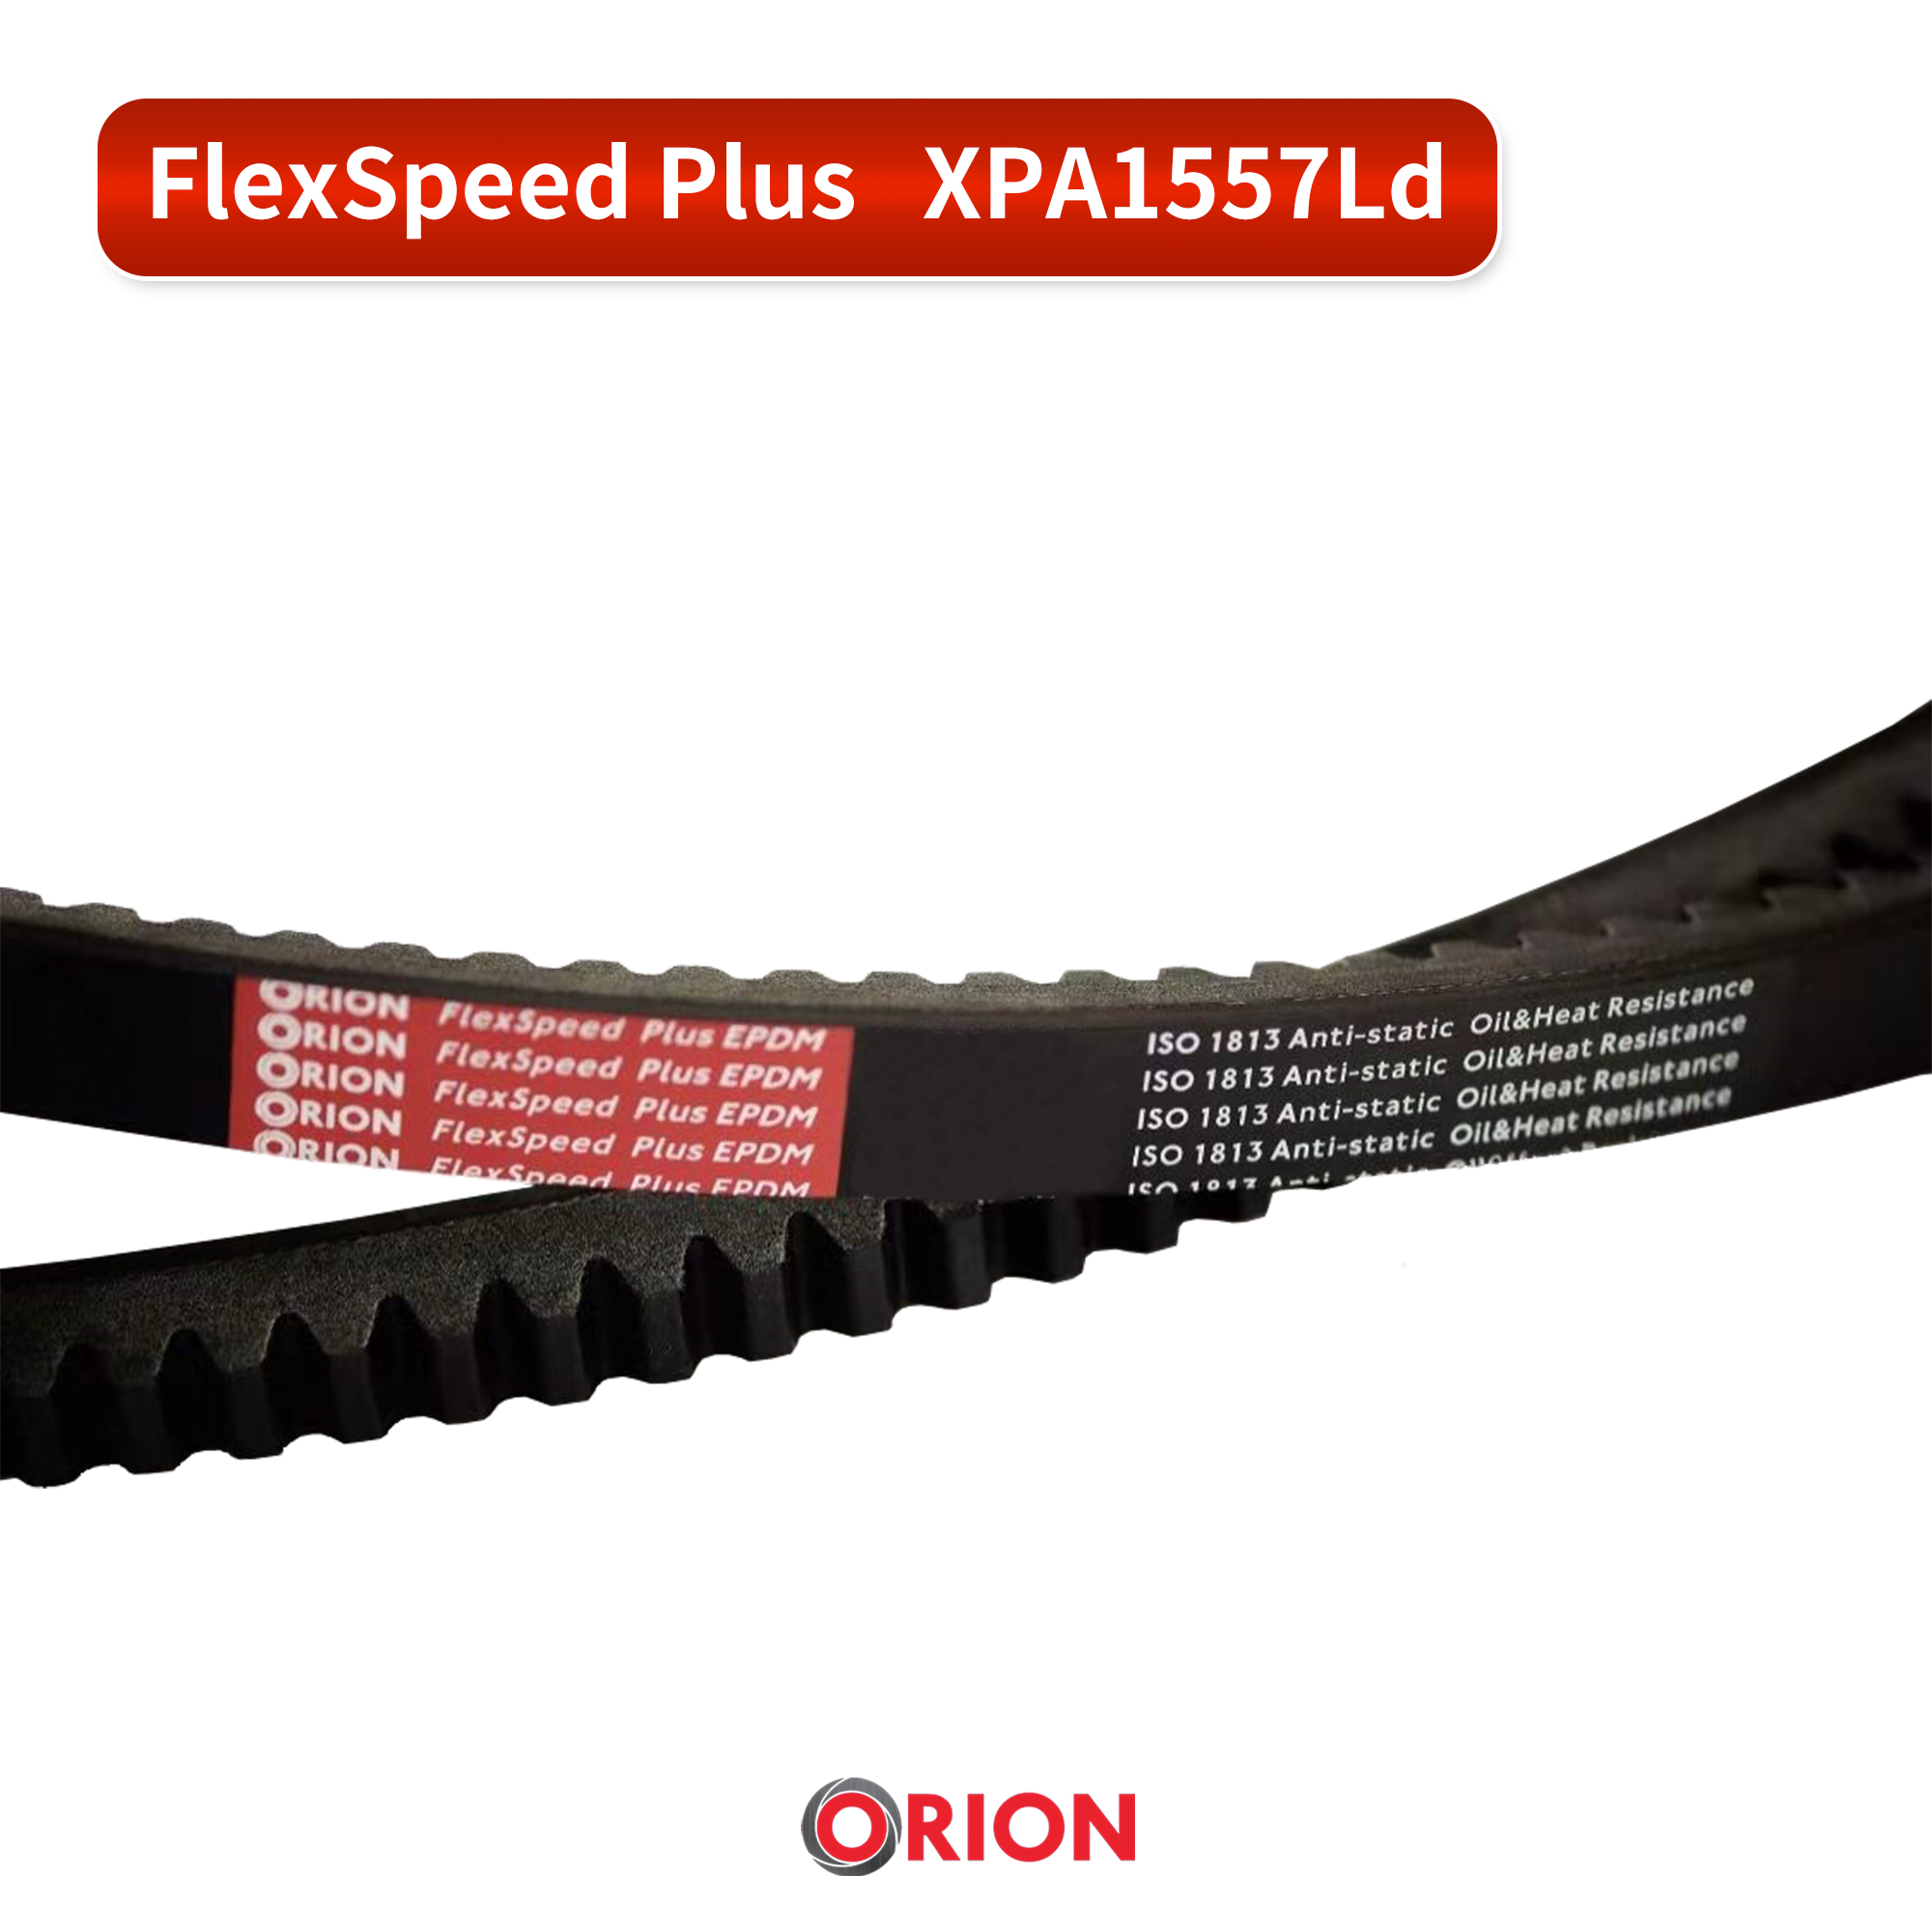 ORION FlexSpeed Plus XPA1557 Ld （红标）